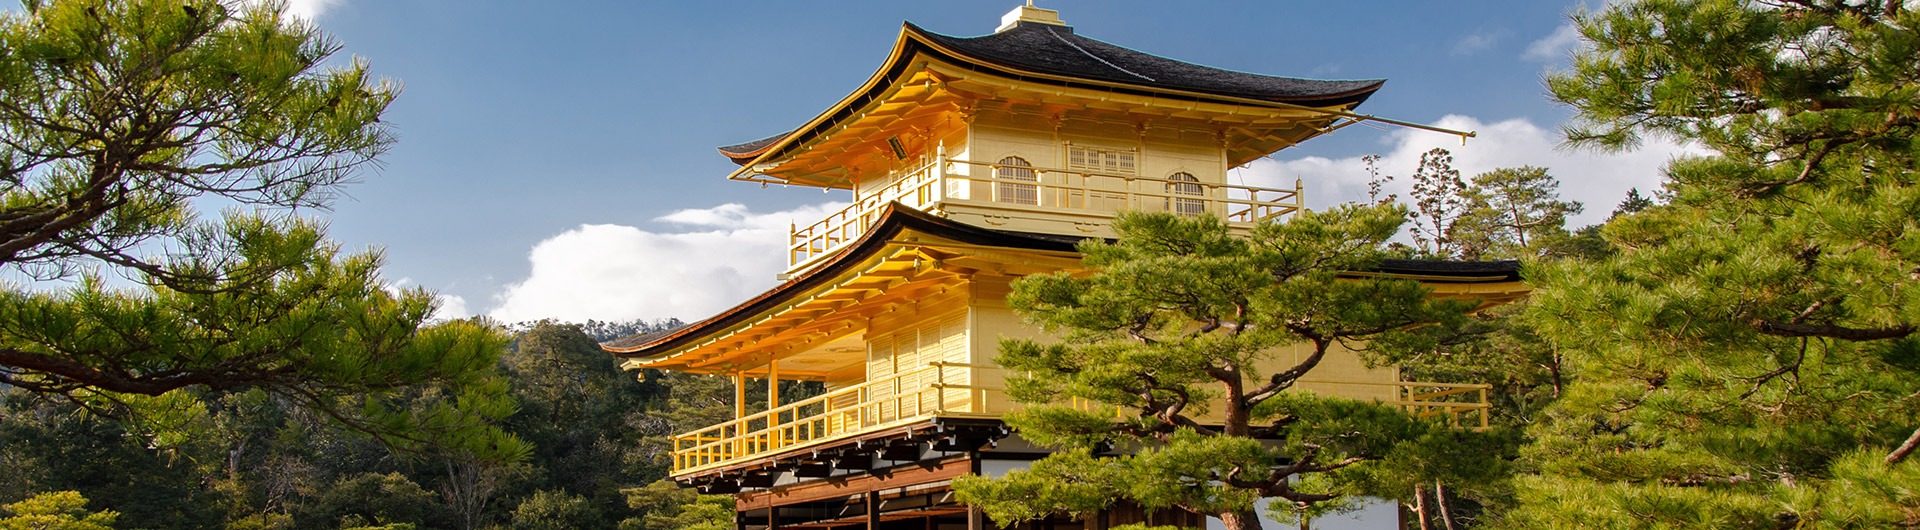 Kinkaku-ji (the Golden Temple) in Kyoto, Japan